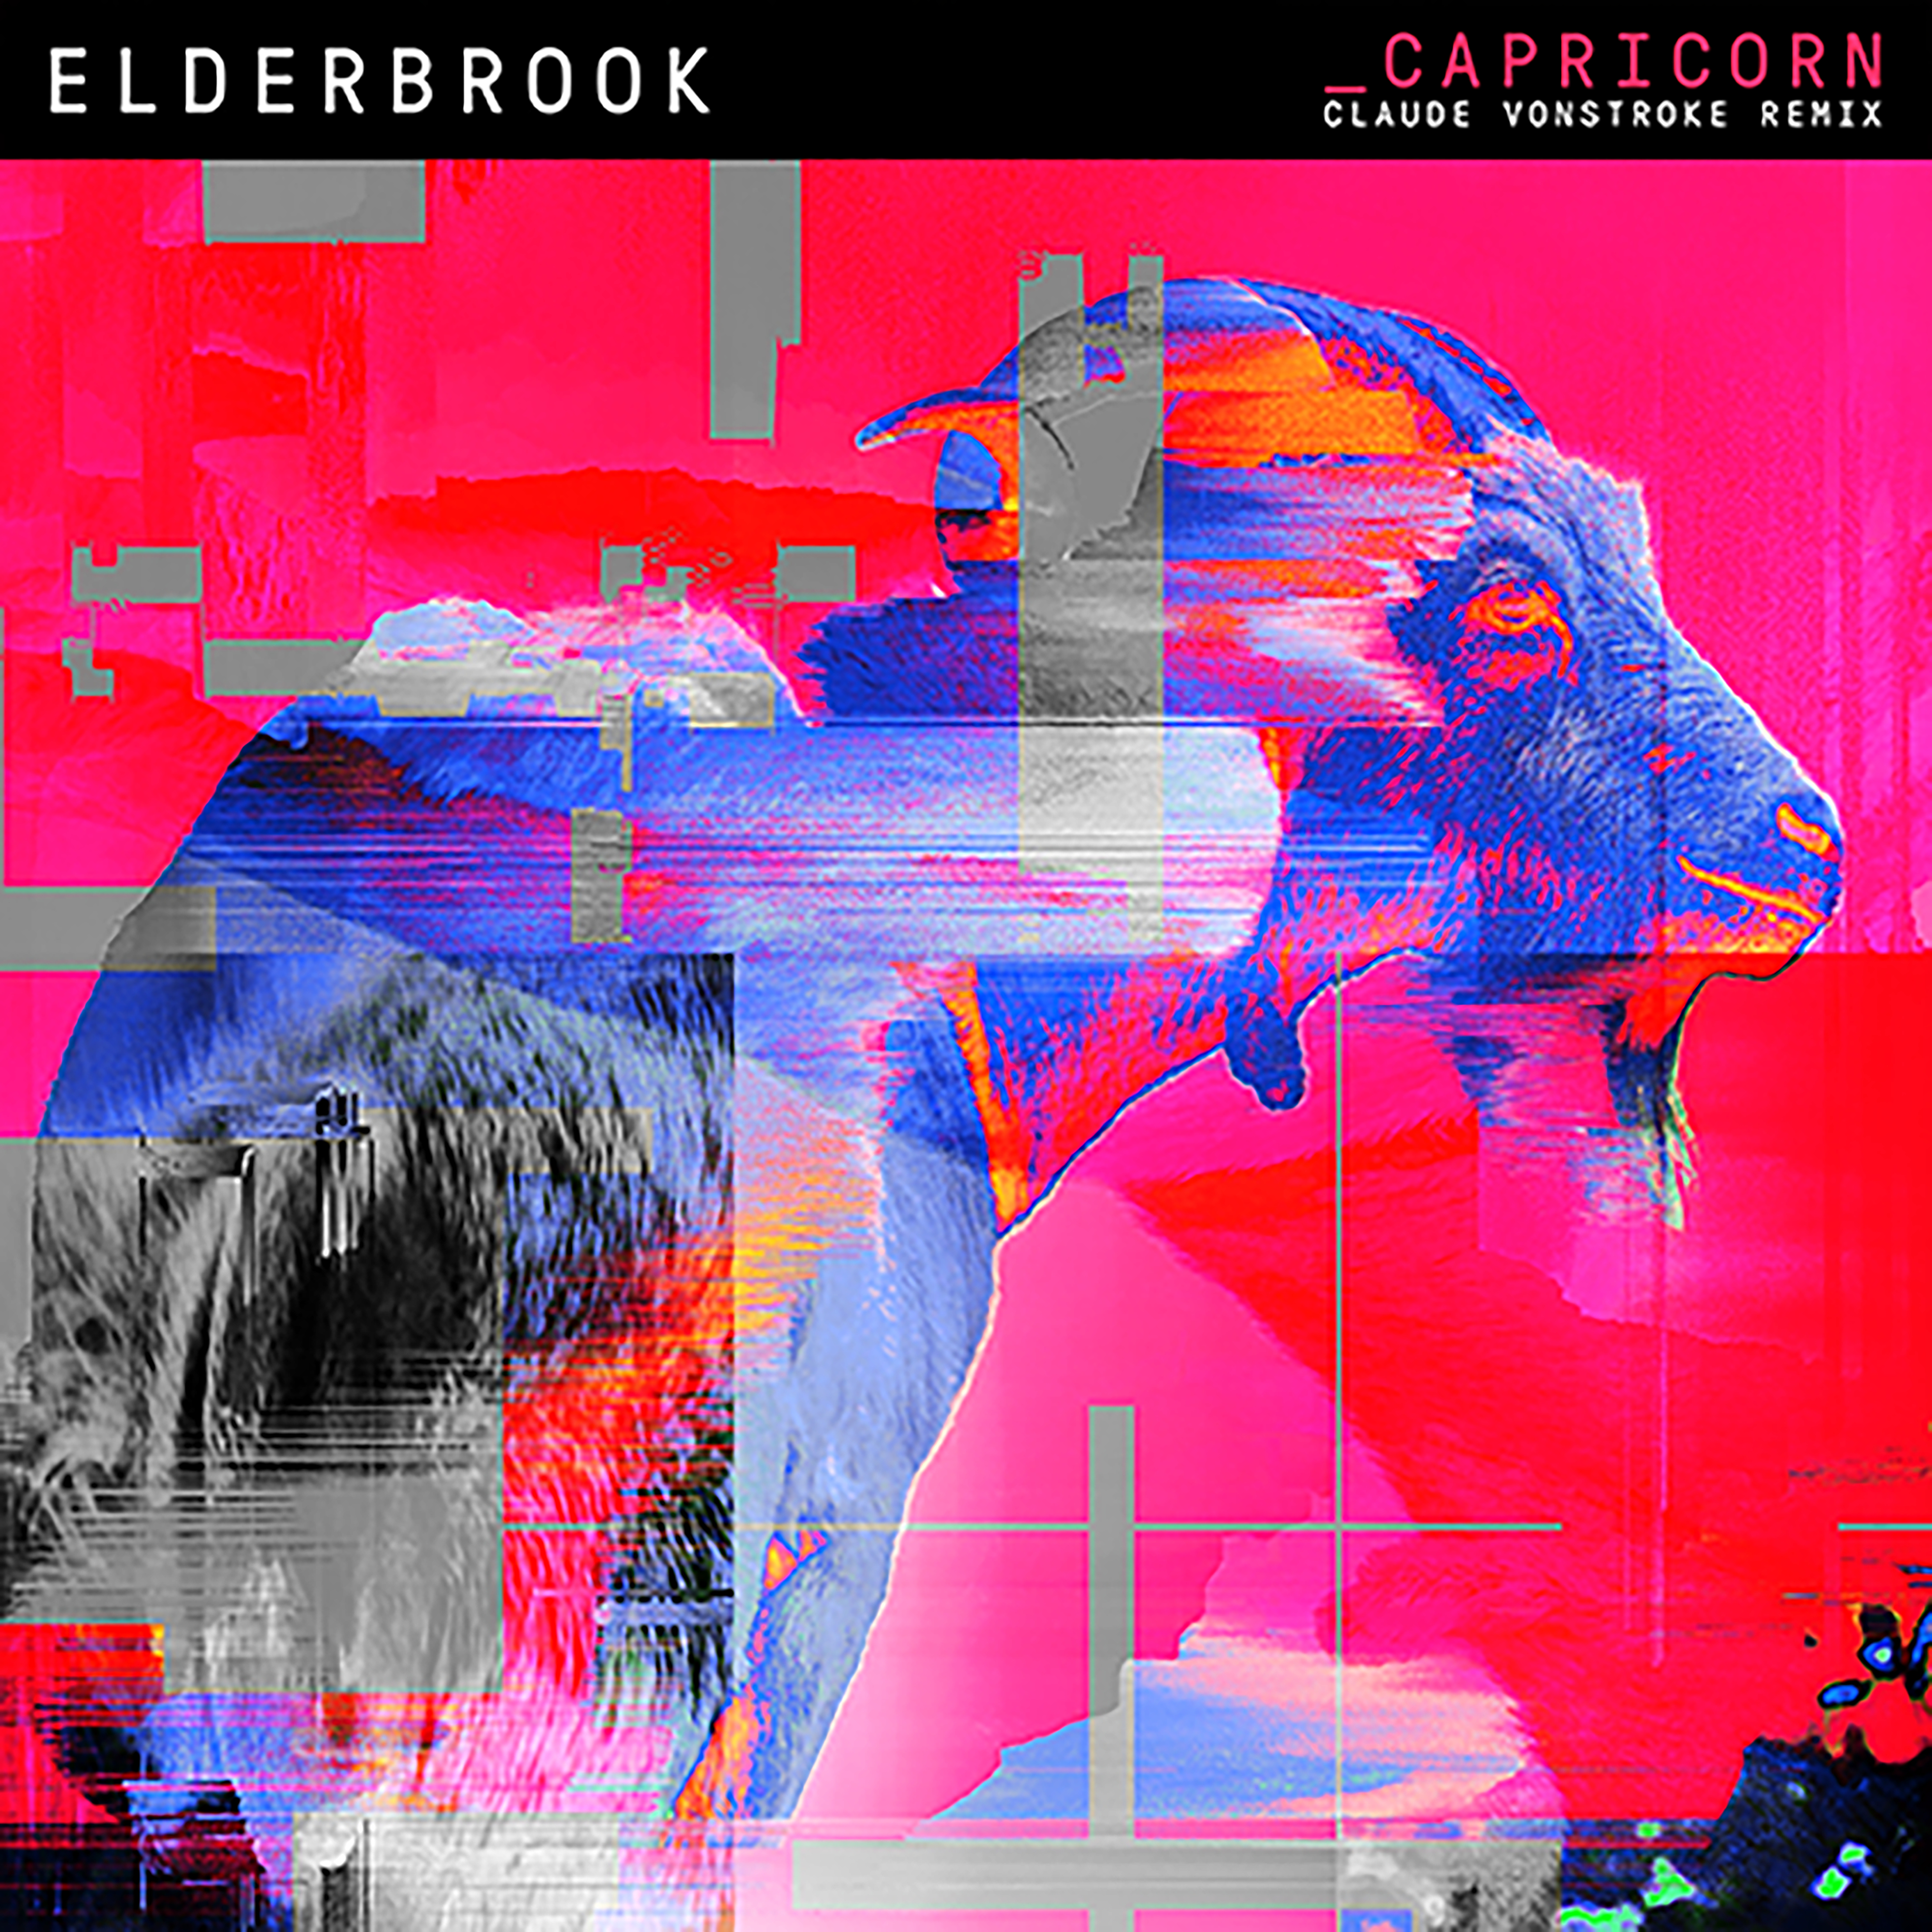 Capricorn (Claude VonStroke Remix)